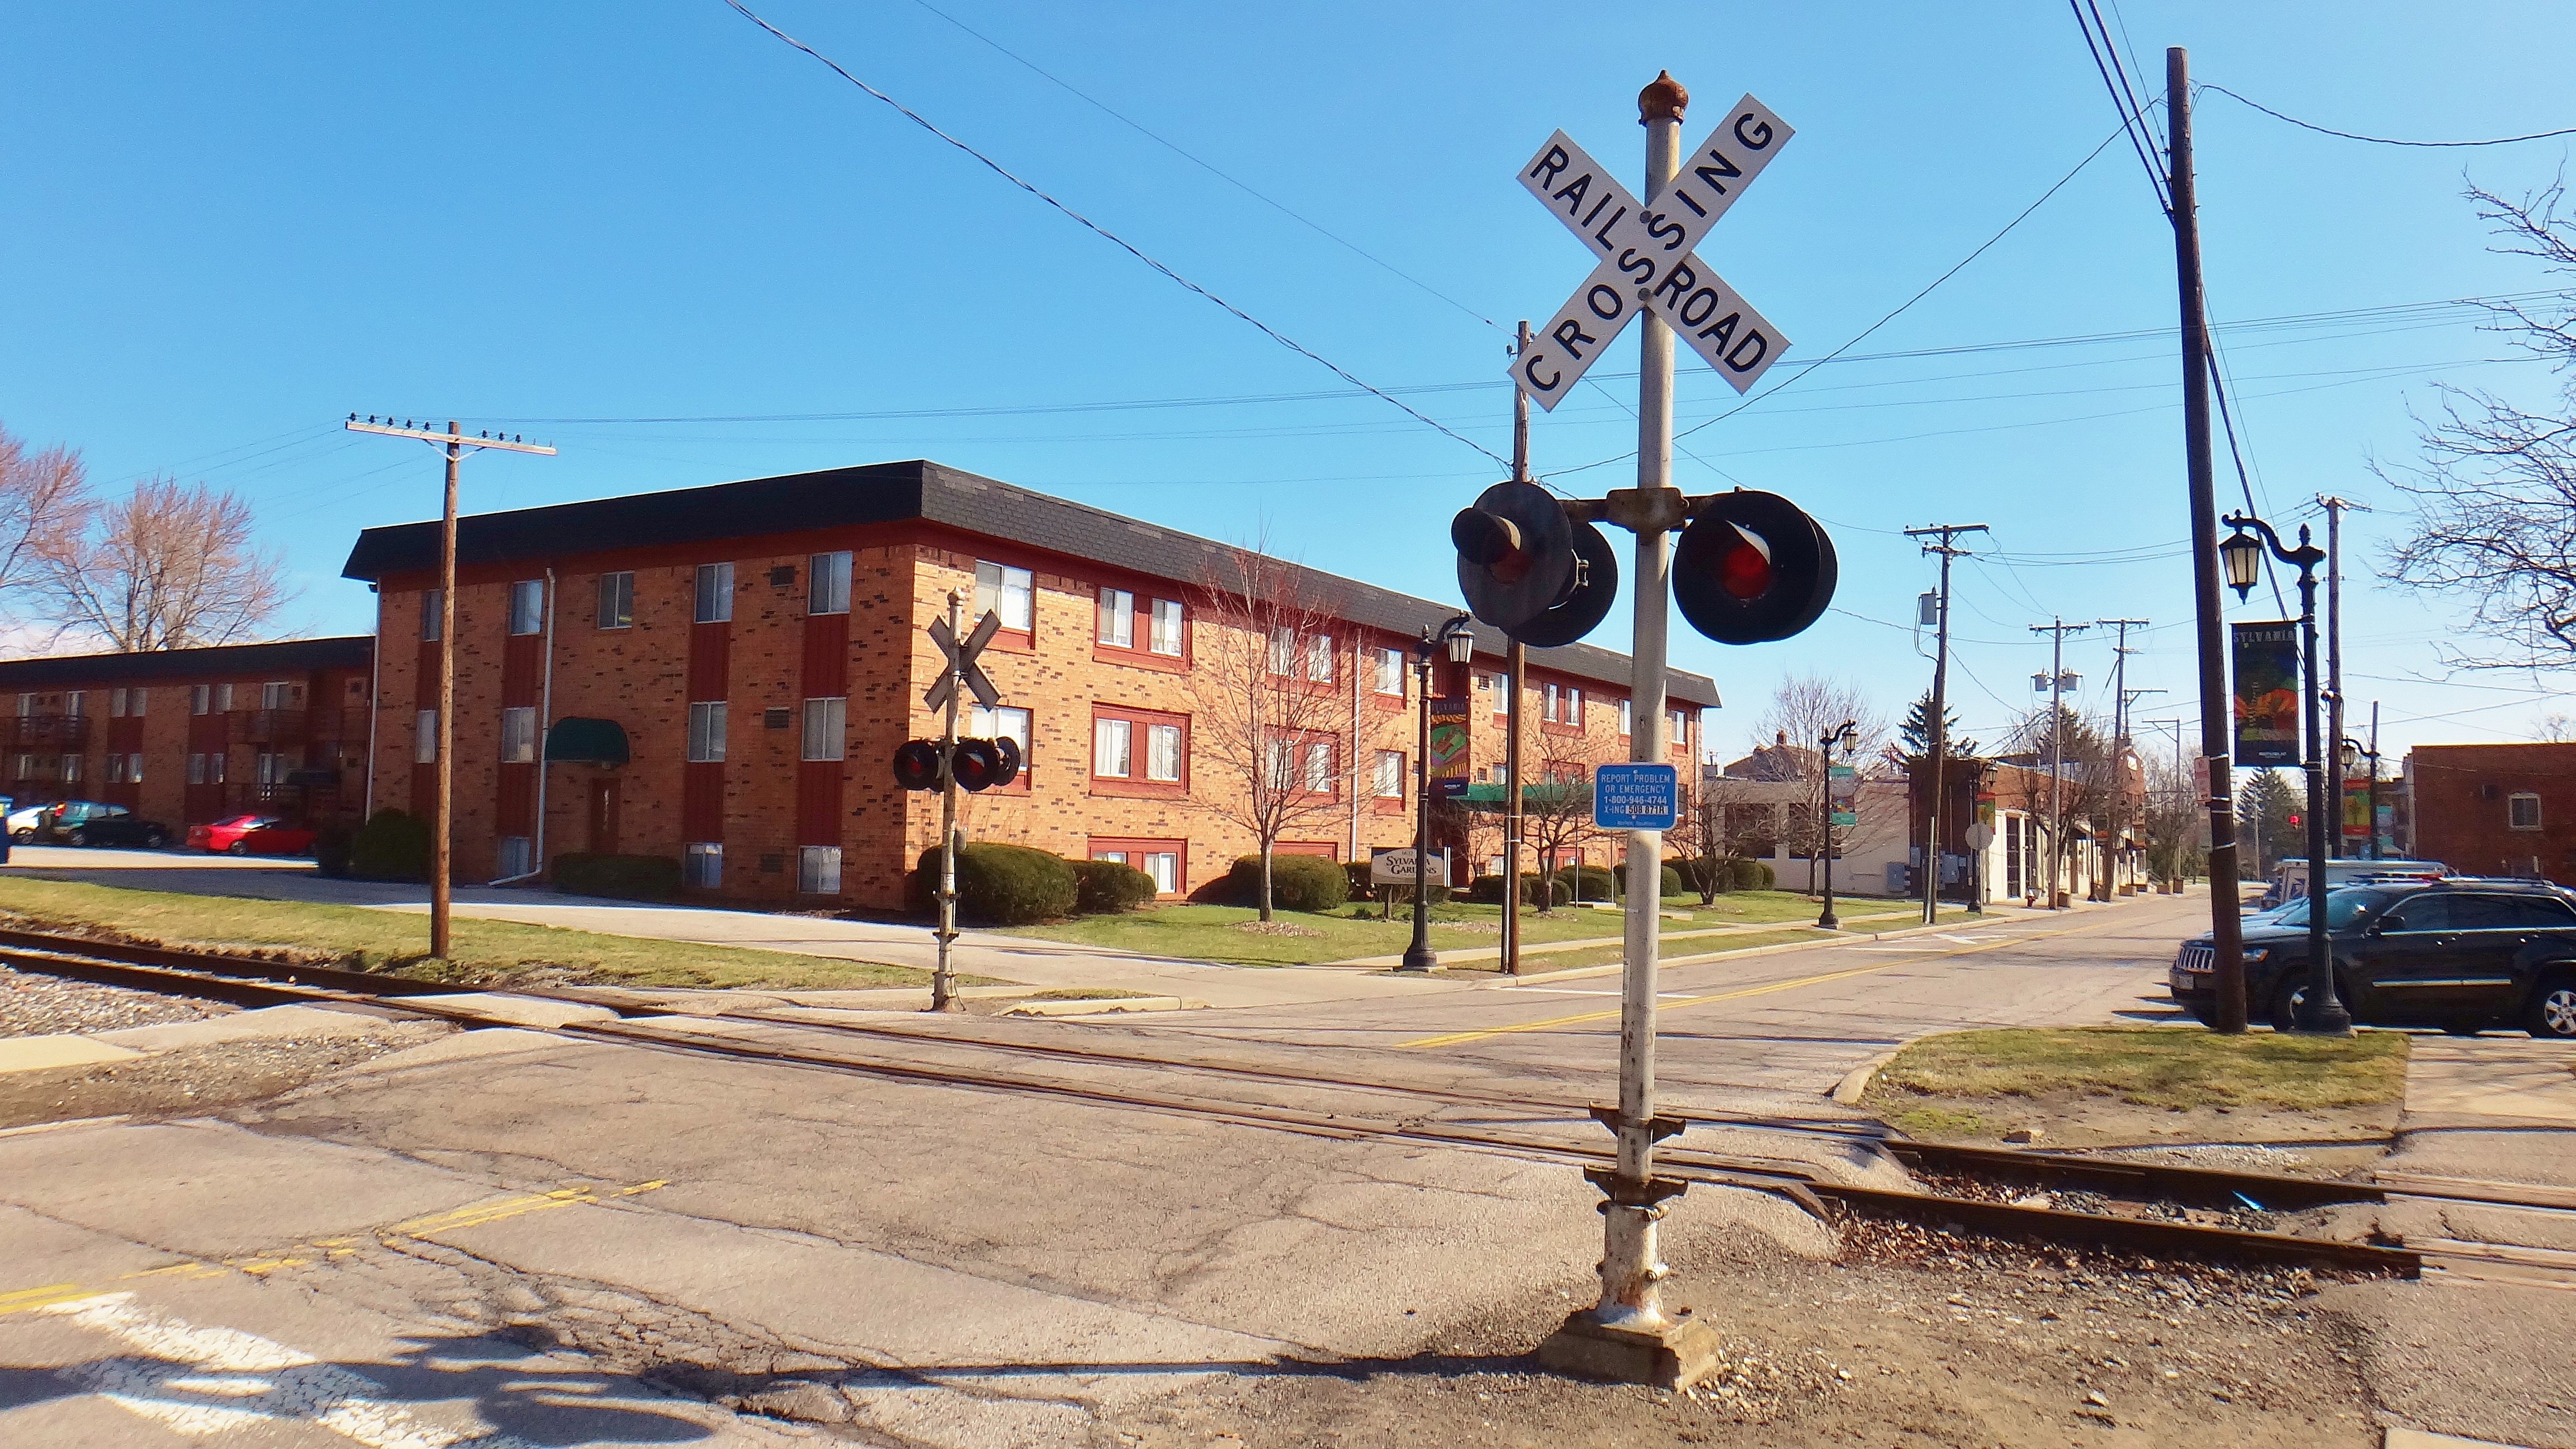 File:Downtown Sylvania, Ohio railroad crossing.JPG - Wikimedia Commons